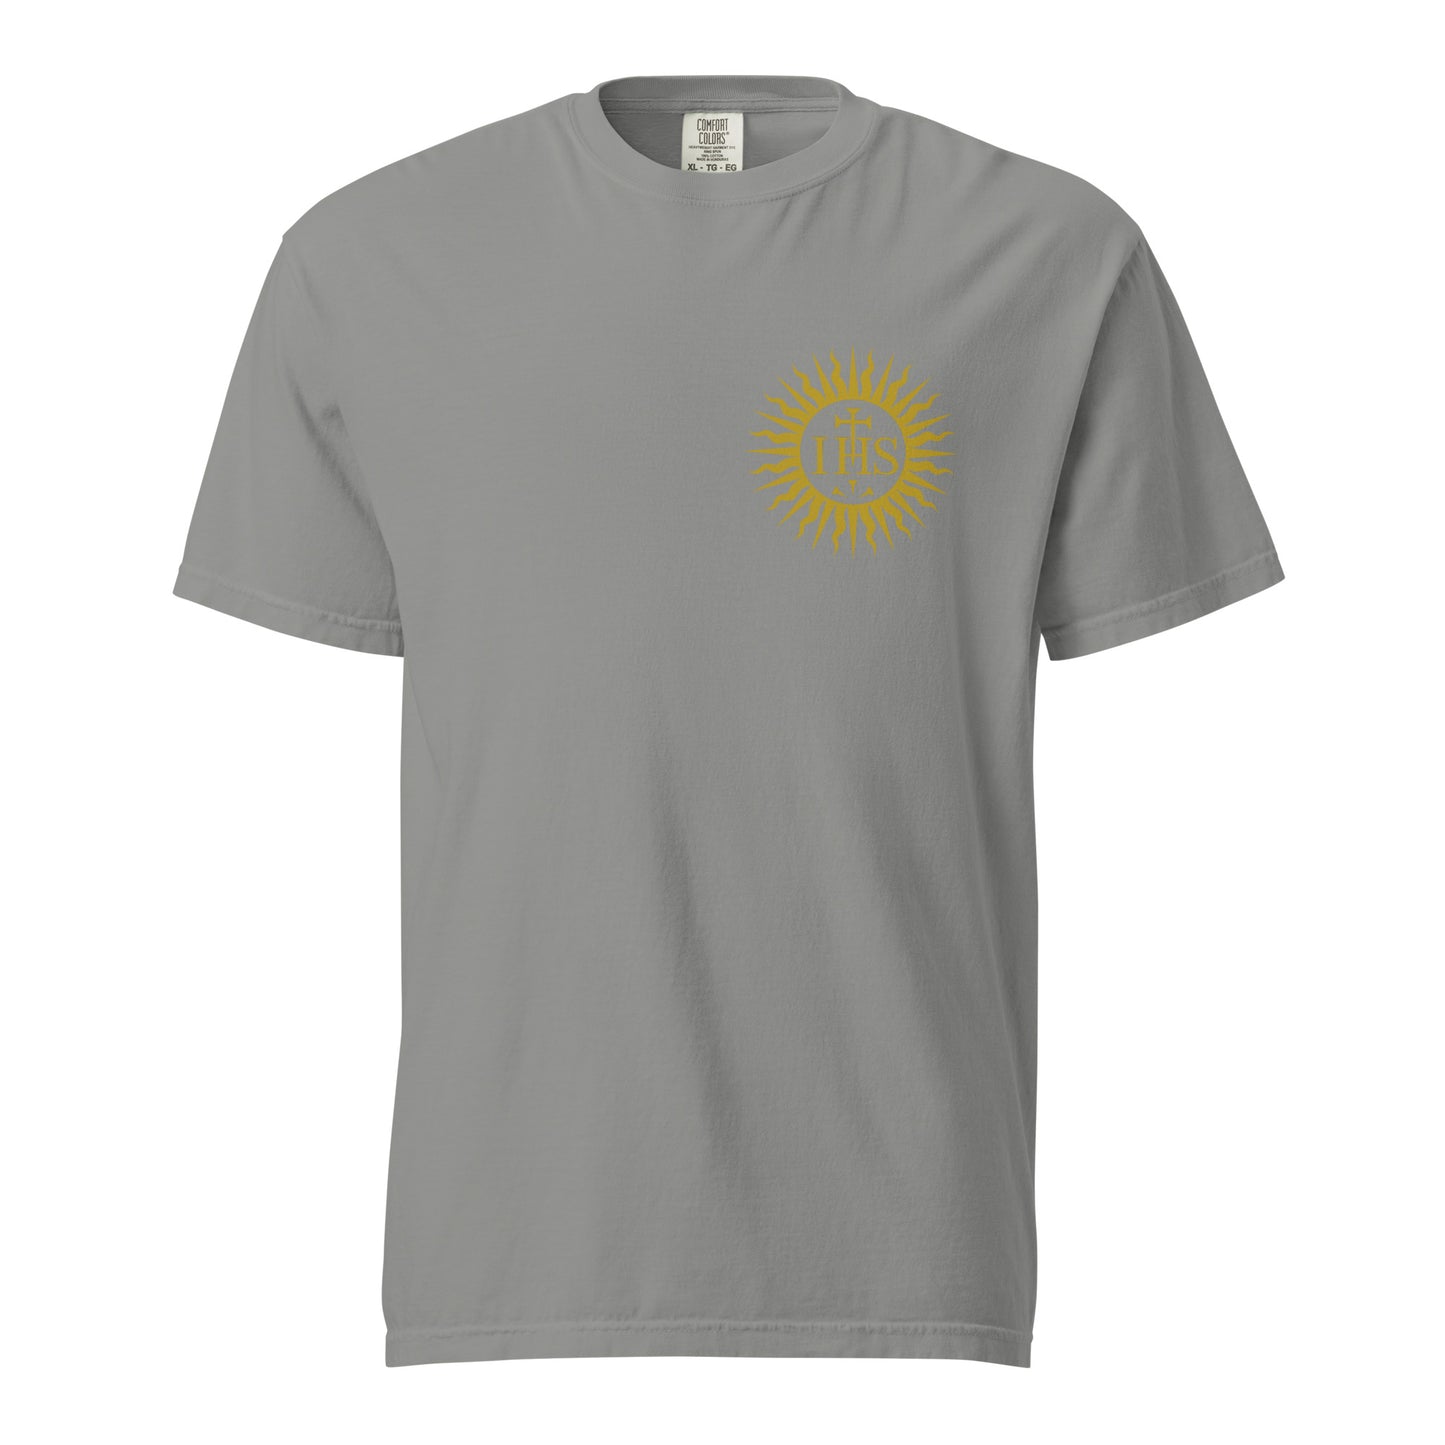 IHS - Jesus - Unisex garment-dyed heavyweight t-shirt